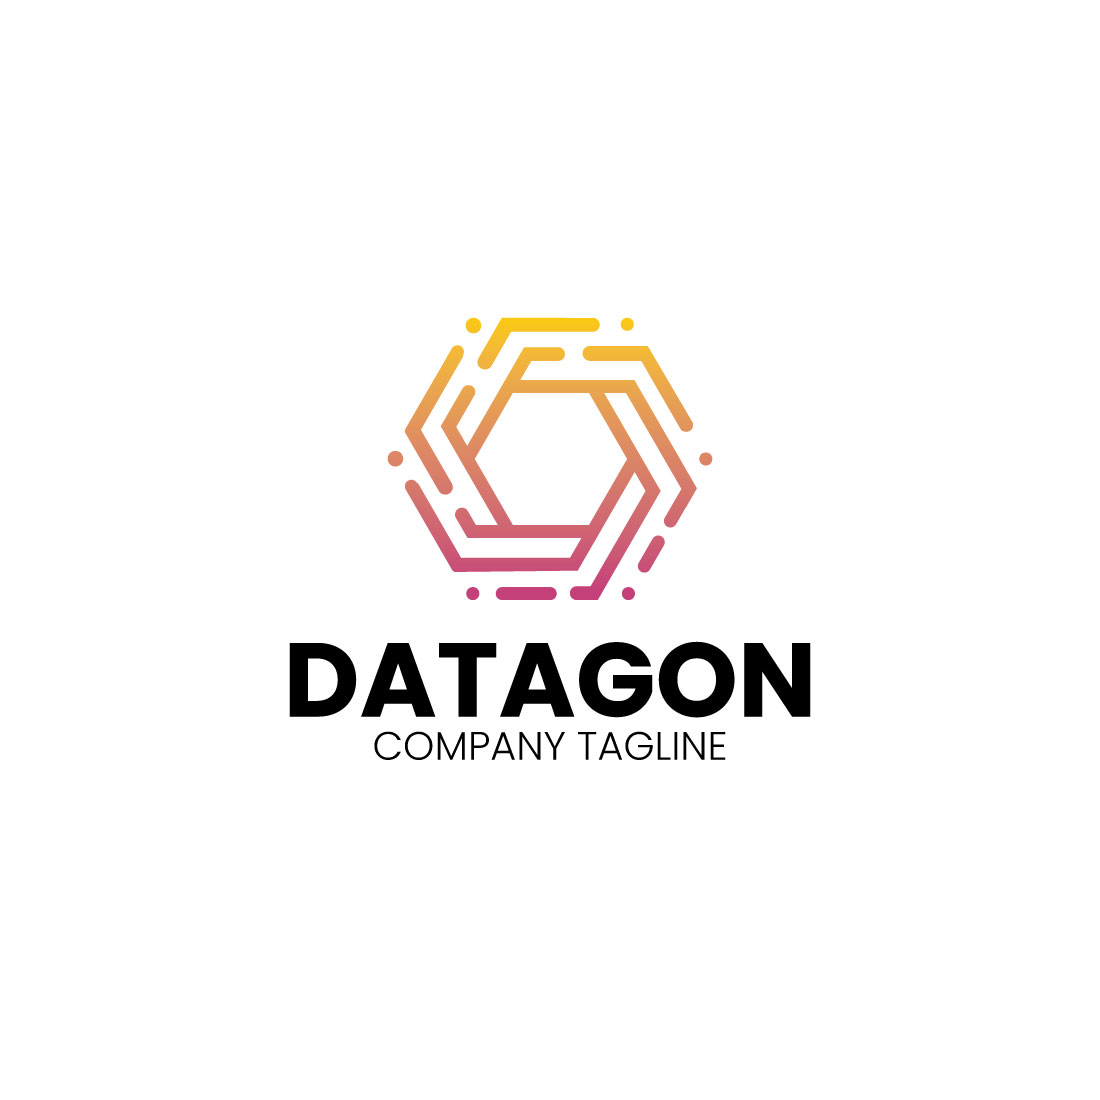 Datagon V2 Logo Template preview image.